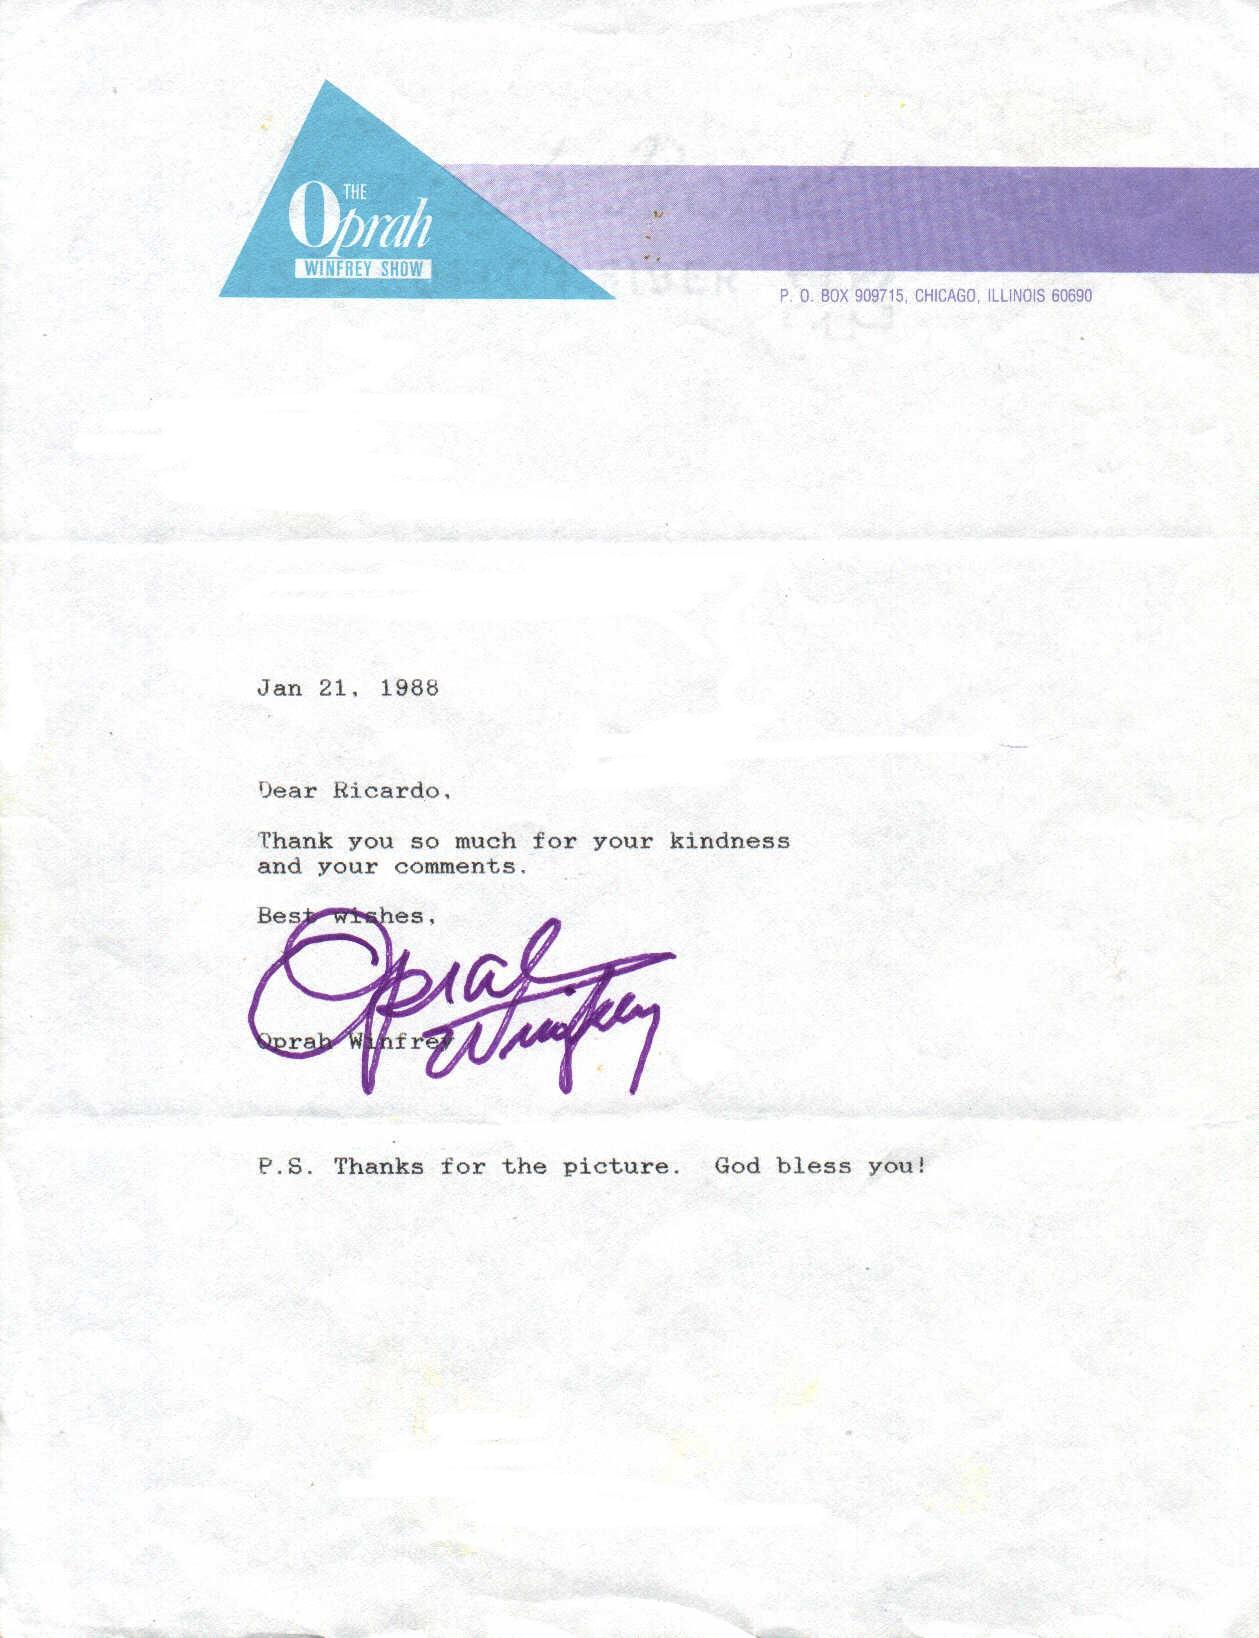 Ricky's Letter From Oprah